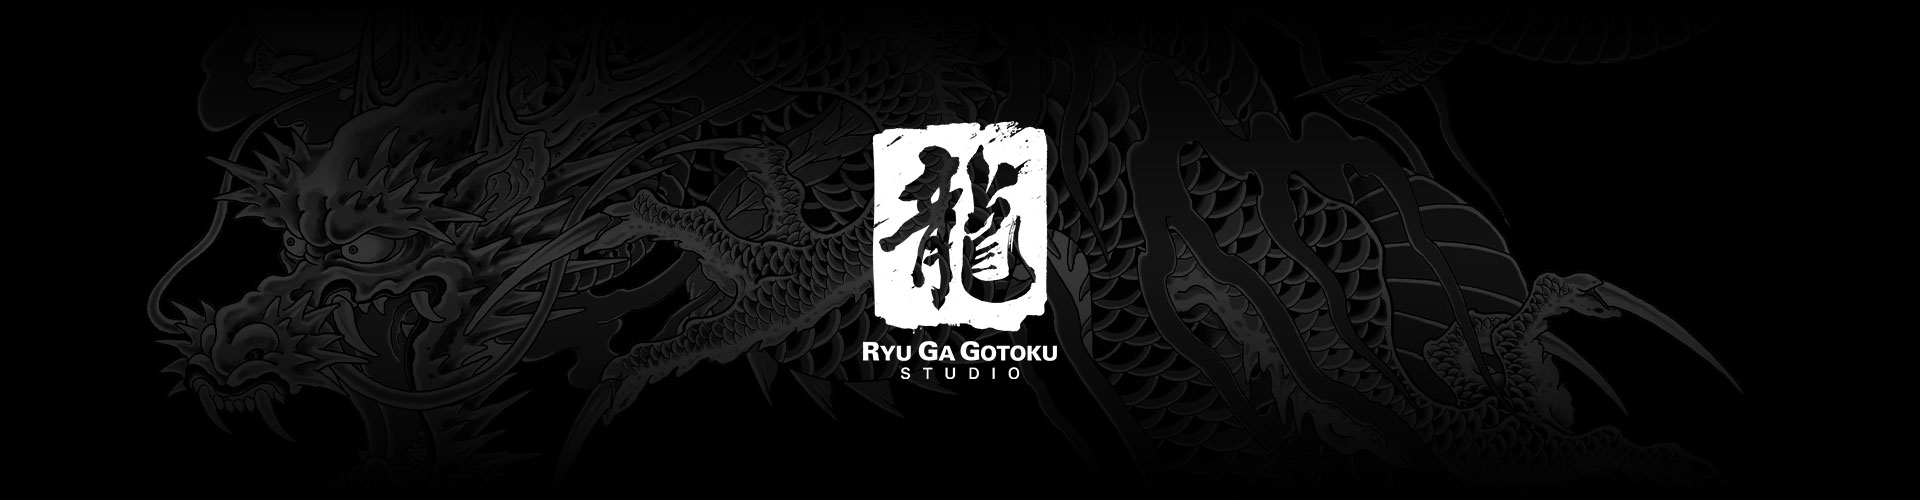 Logo de Ryu Ga Gotoku Studio avec un tatouage de dragon gris en arrière-plan.